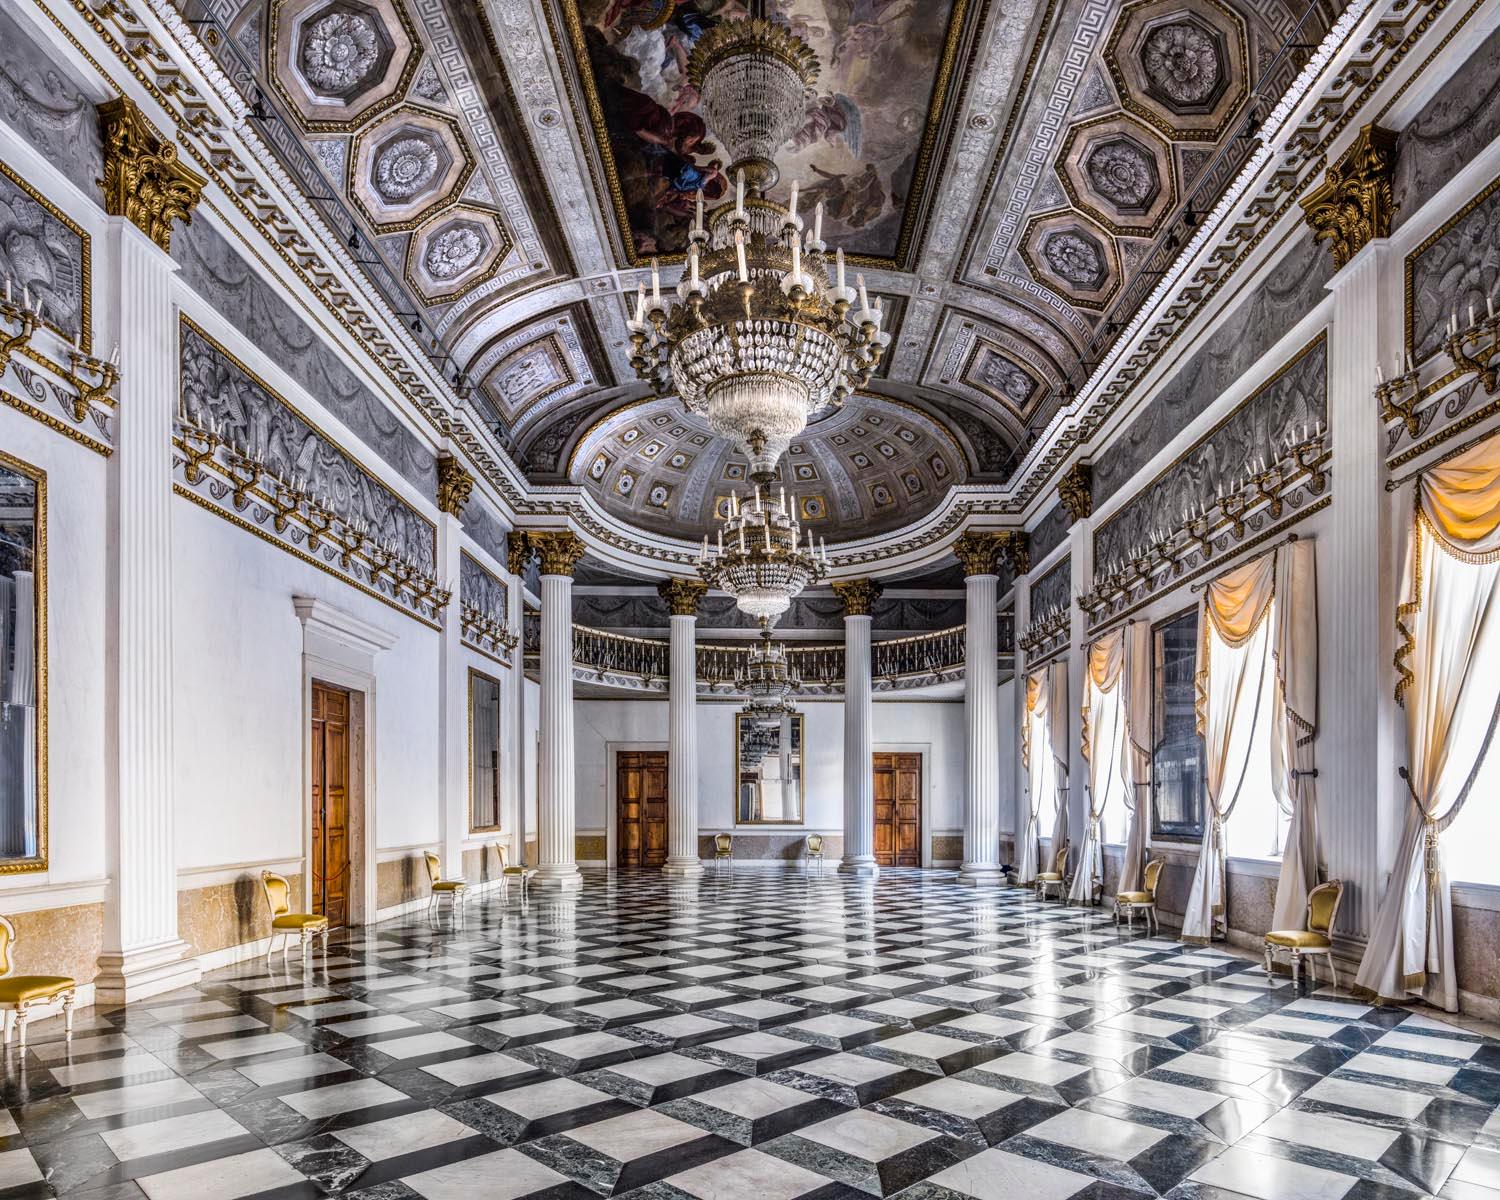 Massimo Listri – Palazzo Reale, Ballraum, Venedig, Italien (Porträt der Inneneinrichtung)